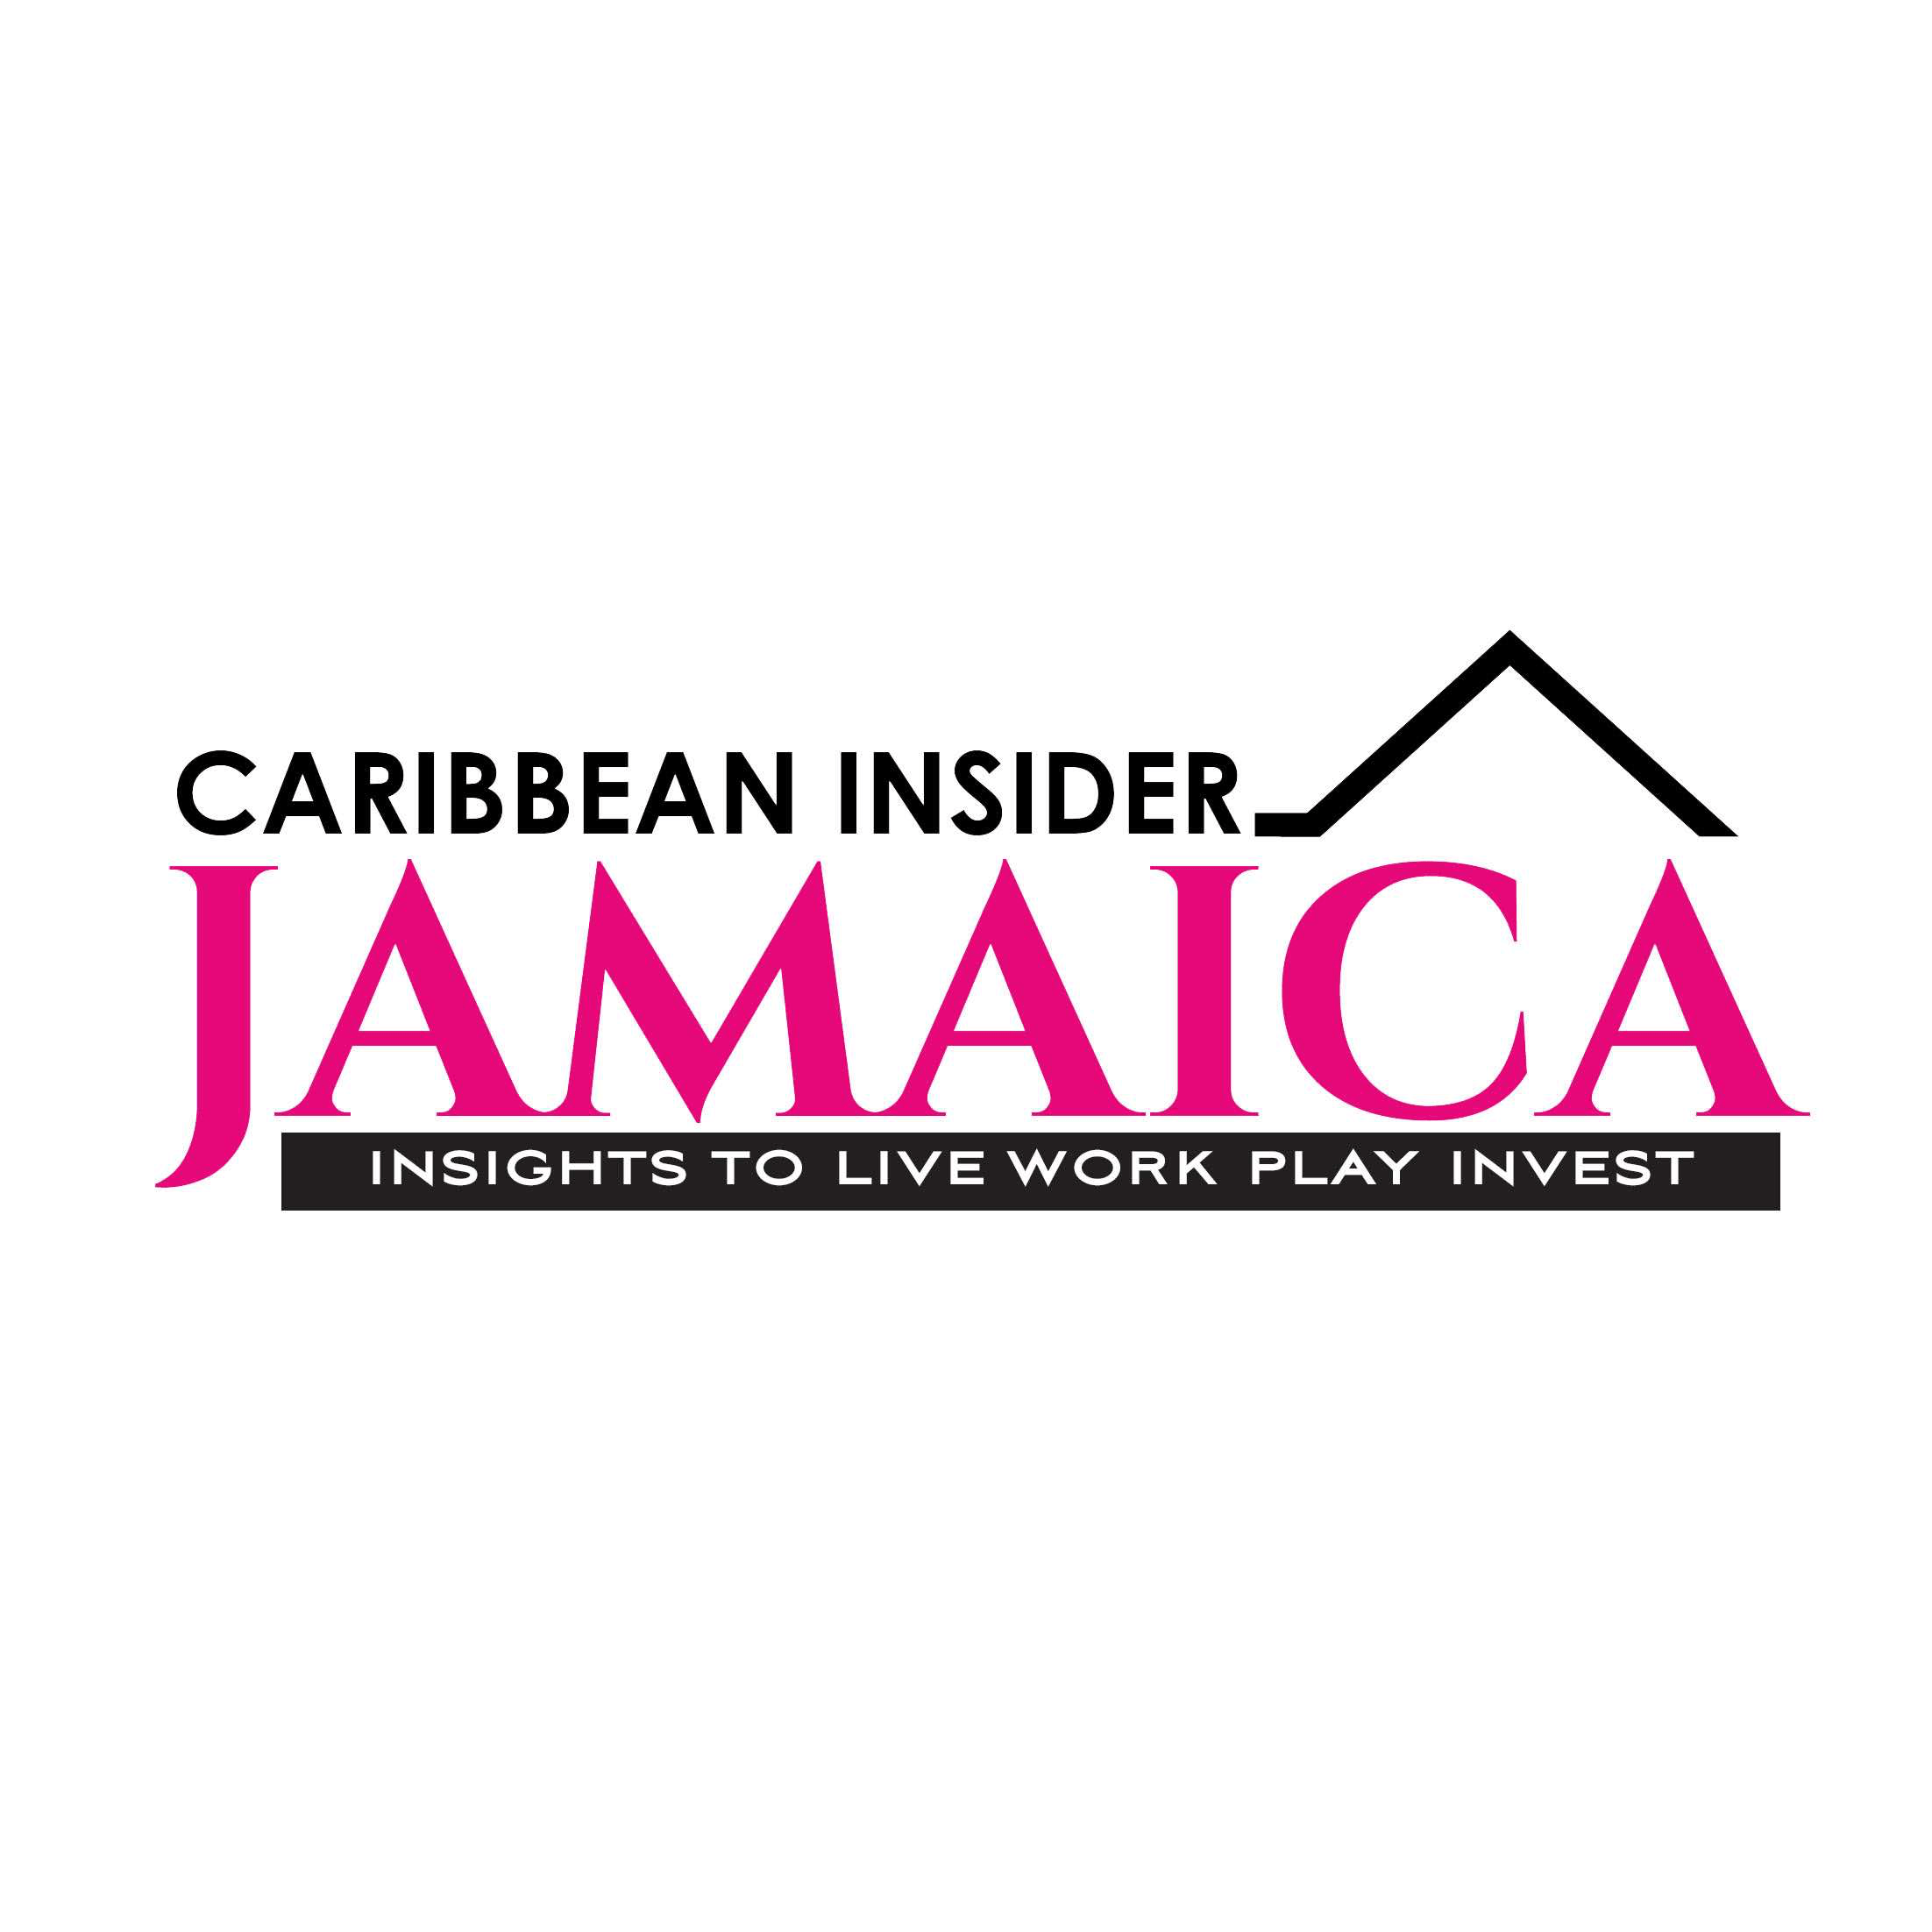 Jamaica Logo - Caribbean Insider Jamaica - business investment lifestyle magazine ...